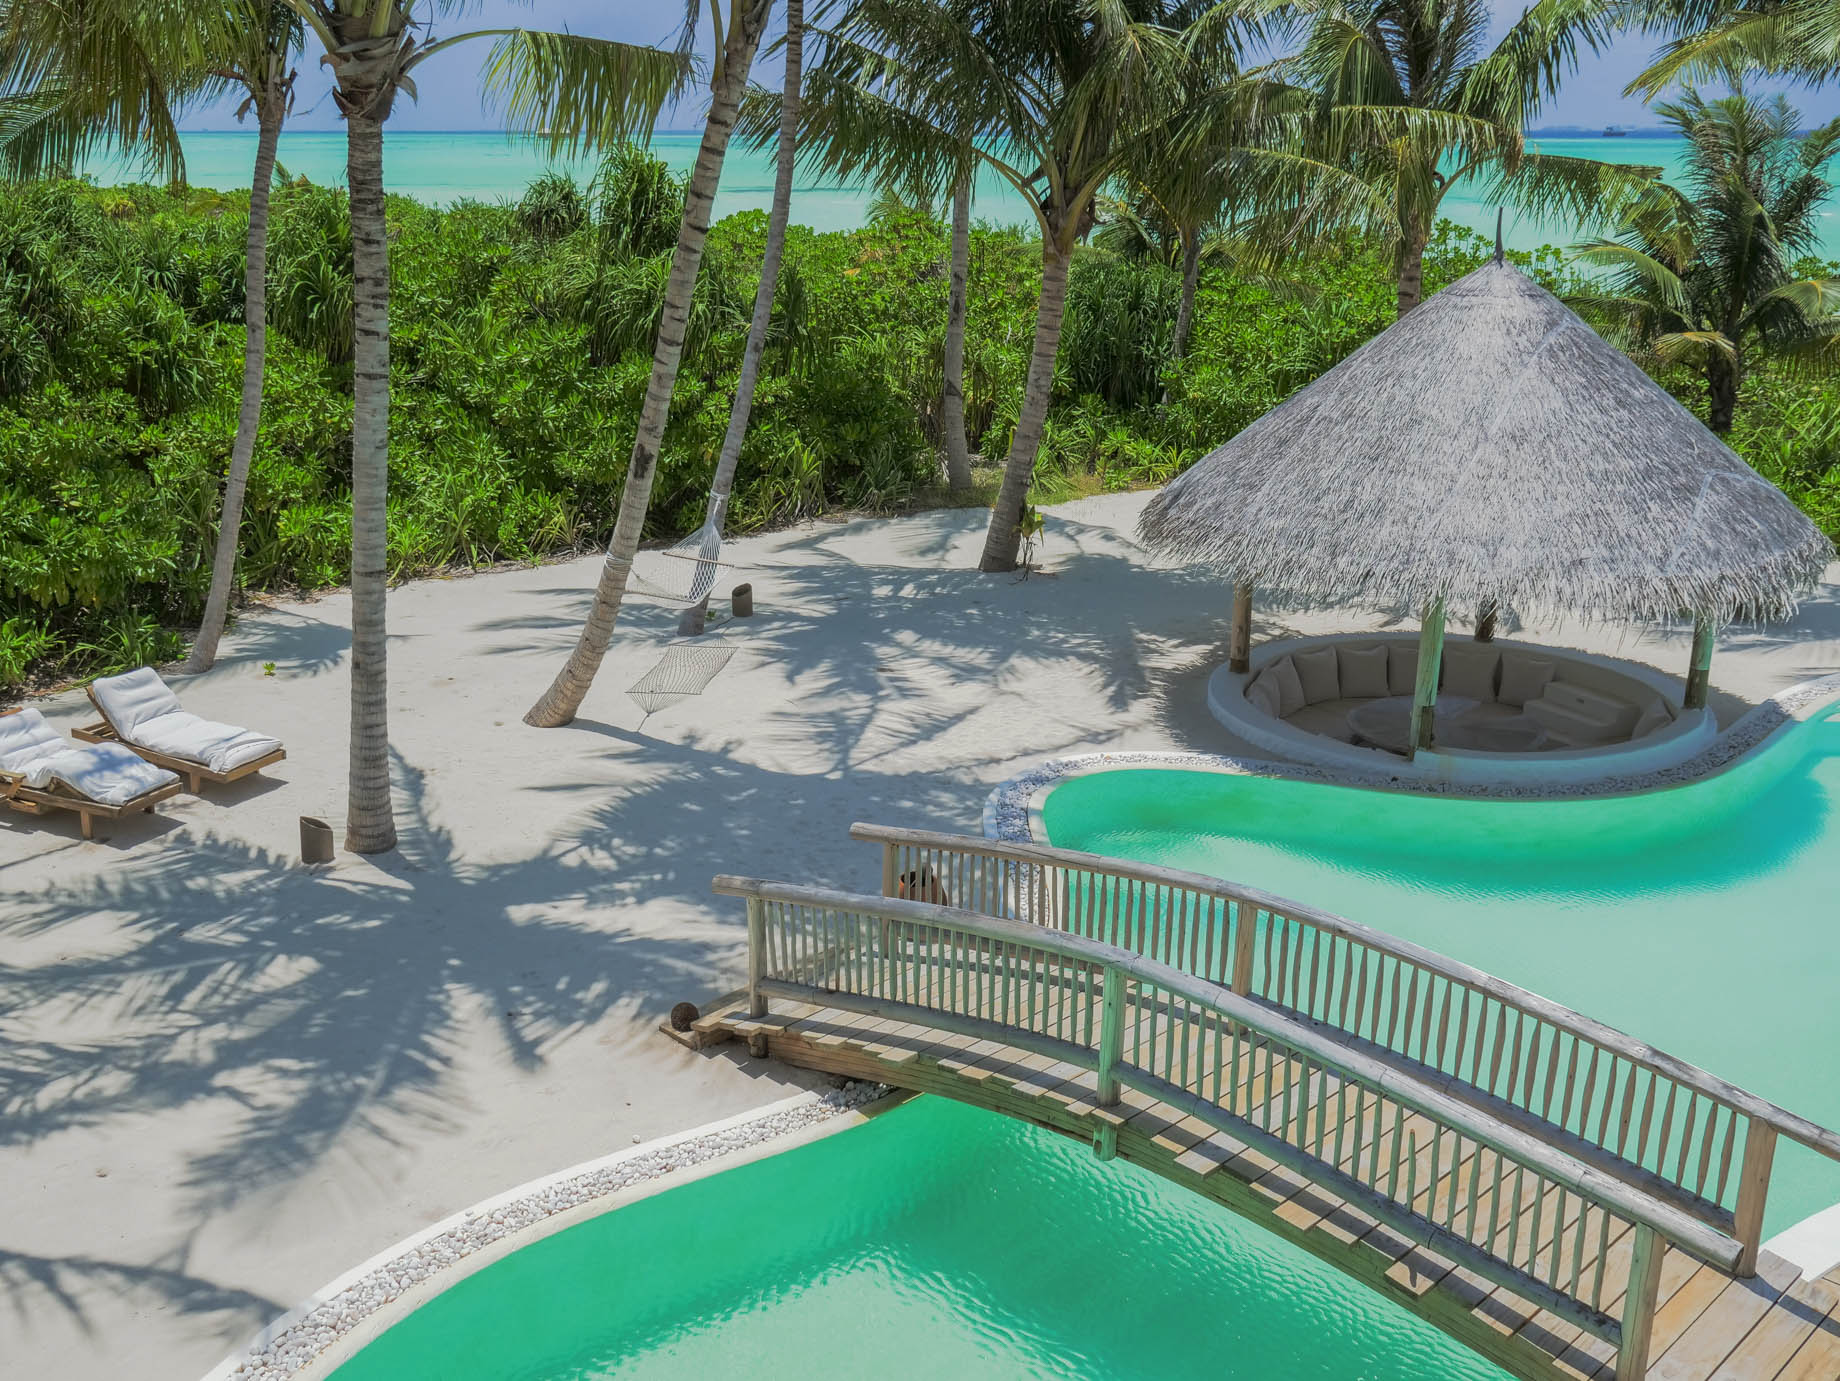 Soneva Jani Resort - Noonu Atoll, Medhufaru, Maldives - 4 Bedroom Island Reserve Villa Exterior Pool Bridge